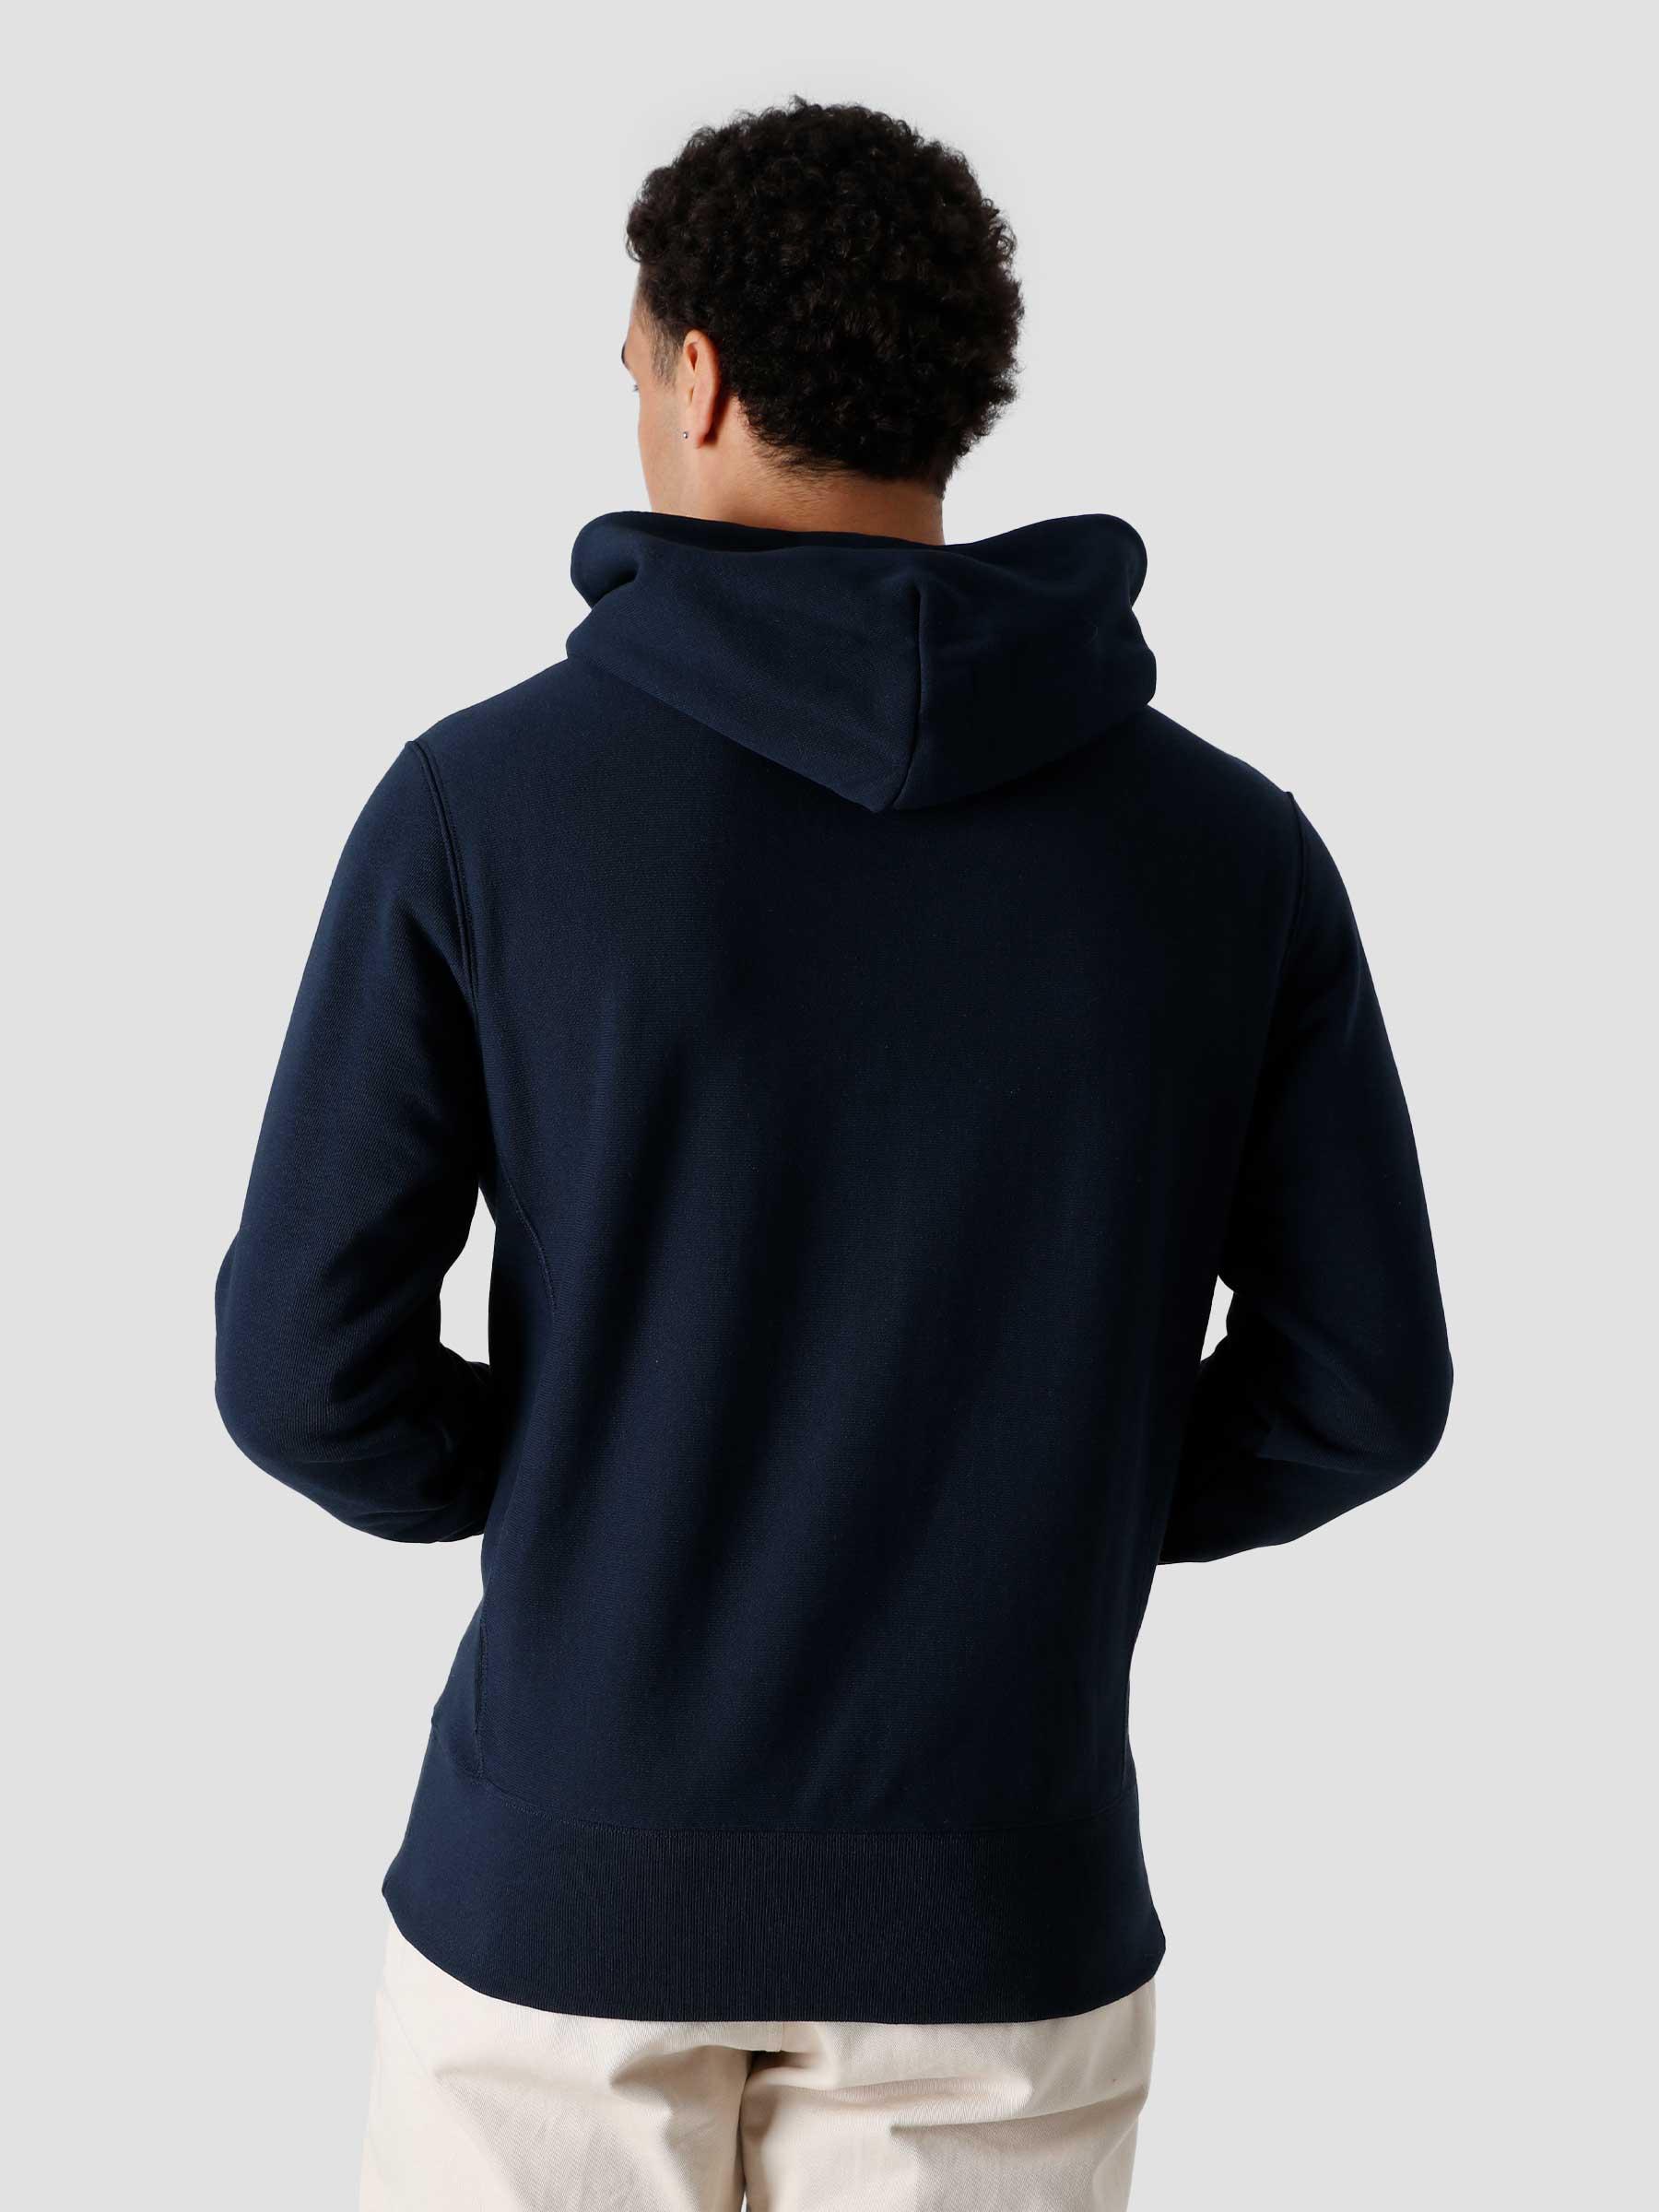 Reverse Weave Soft Microsanded on Backside Hooded Sweatshirt Blue 217233-BS501